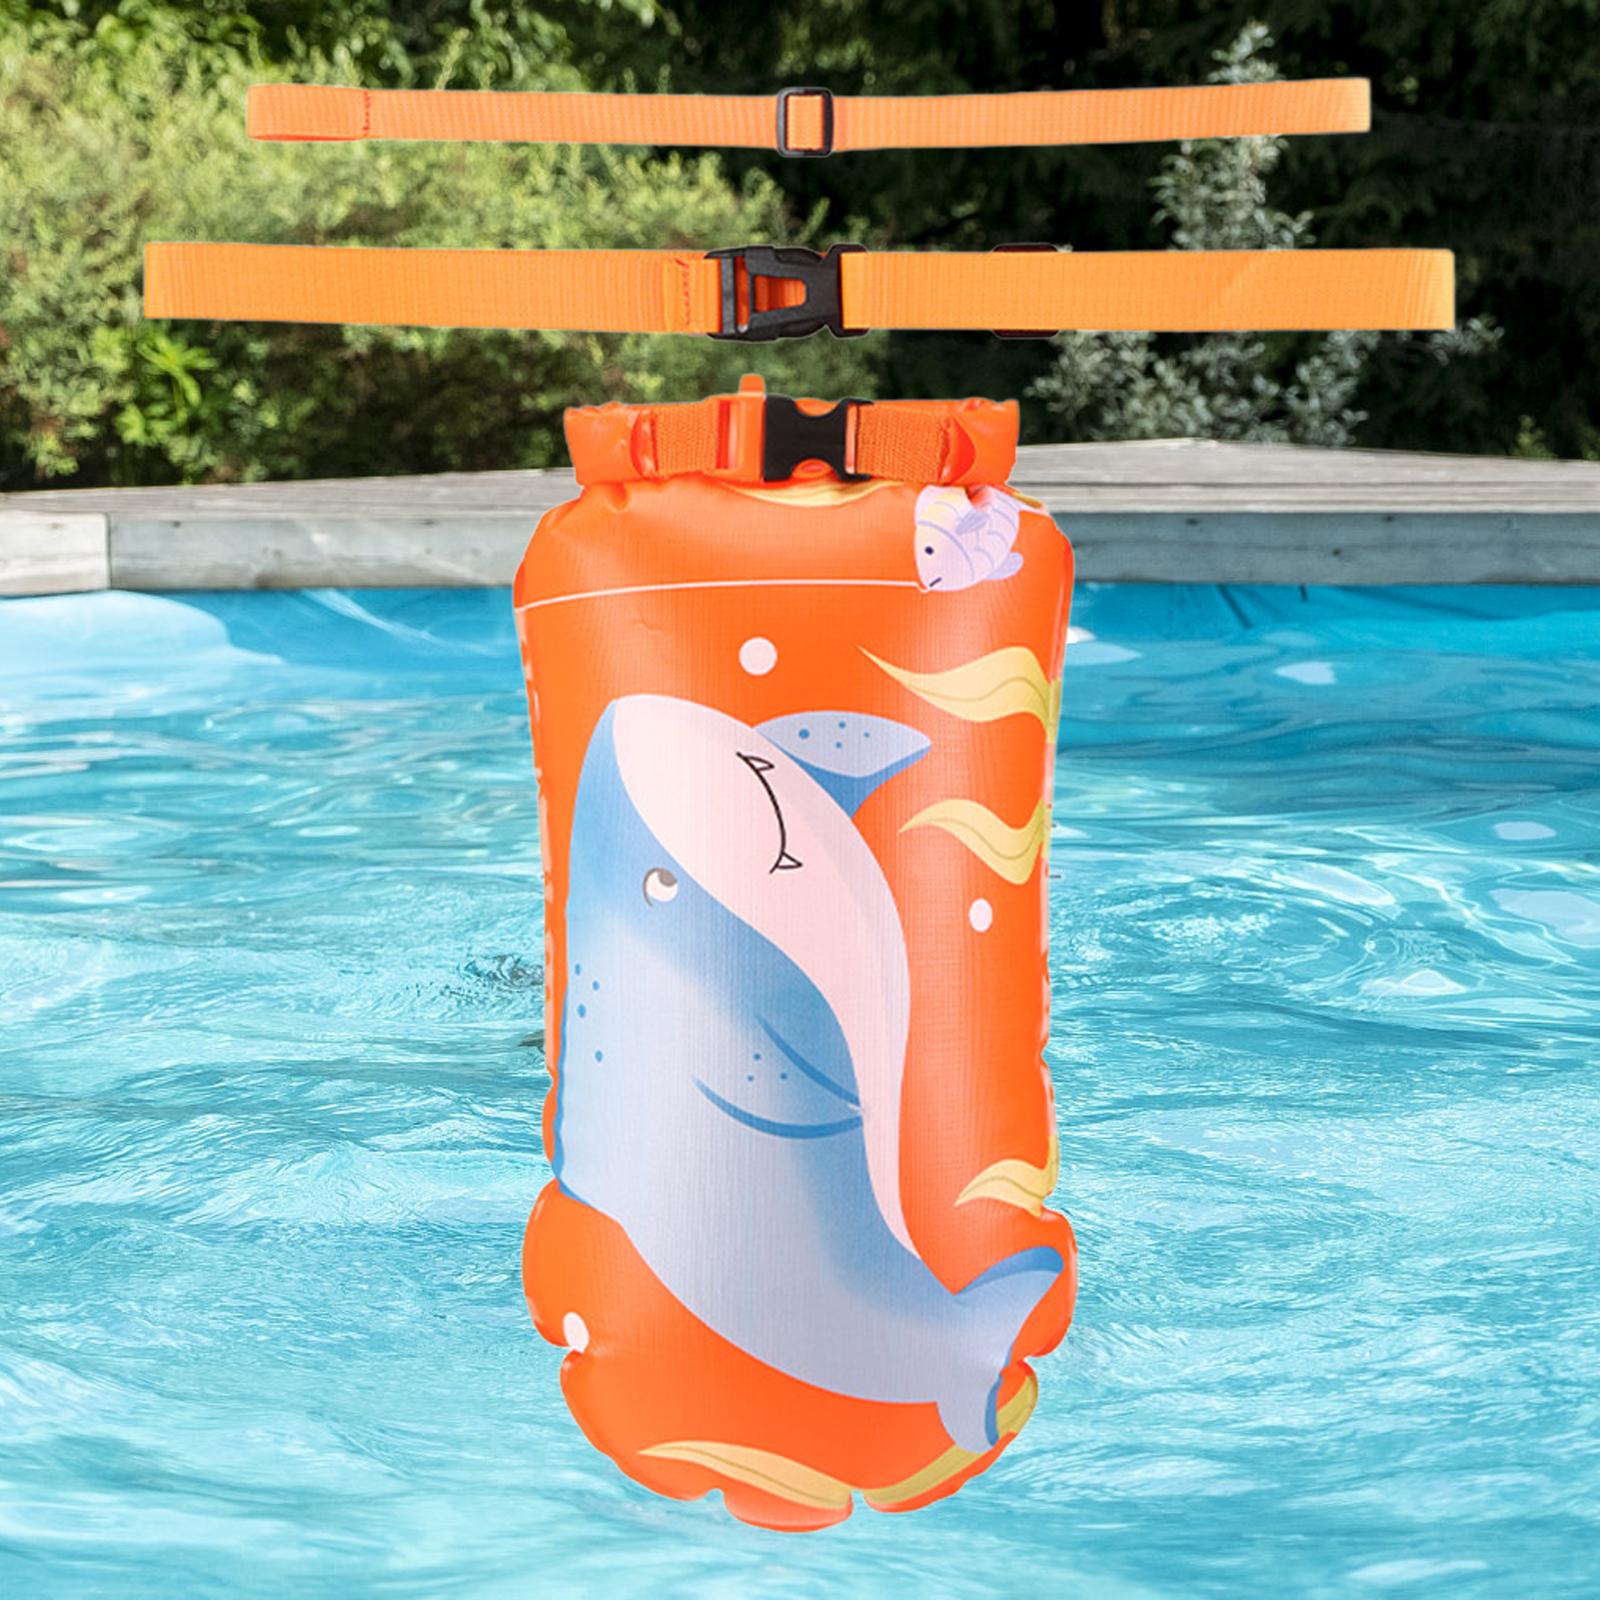 Safety Swim Buoy Waterproof Bag Storage Bag for Water Sports Rafting Boating Orange 45cmx28cm